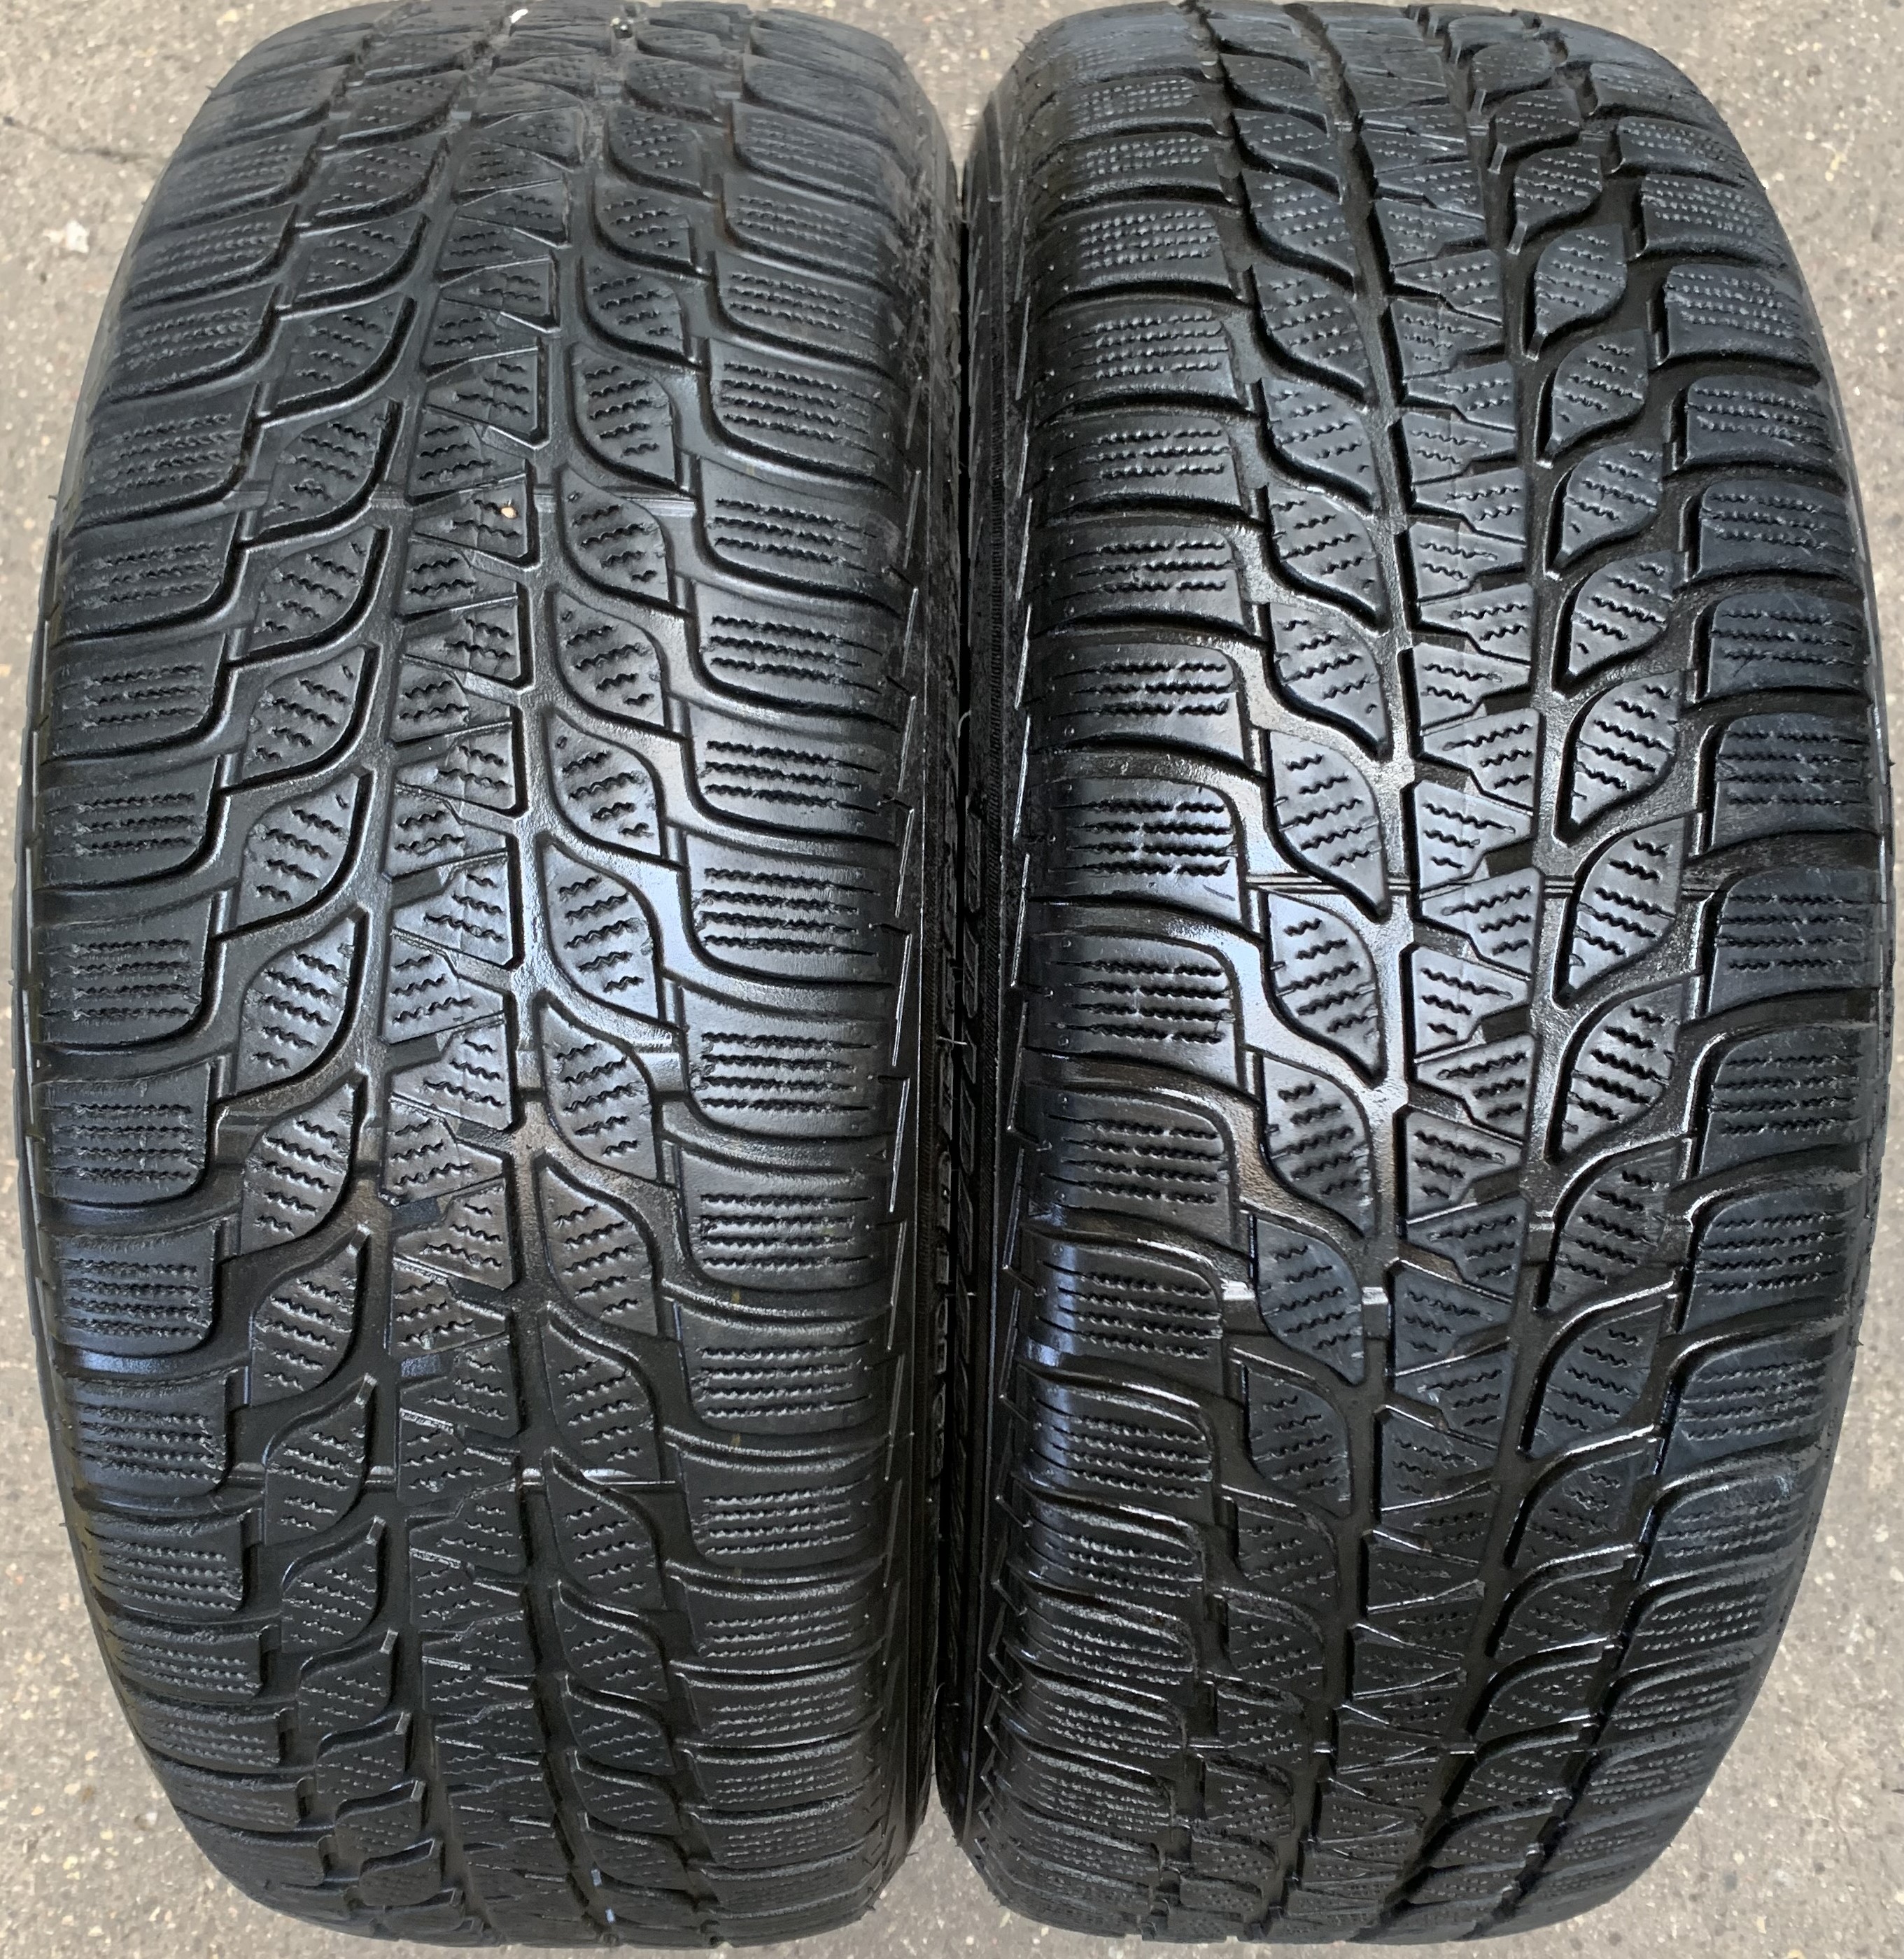 RA5687 Rsc eBay Bridgestone R16 195/55 87H Winter | Tires M+S RFT 2 LM-25 Blizzak